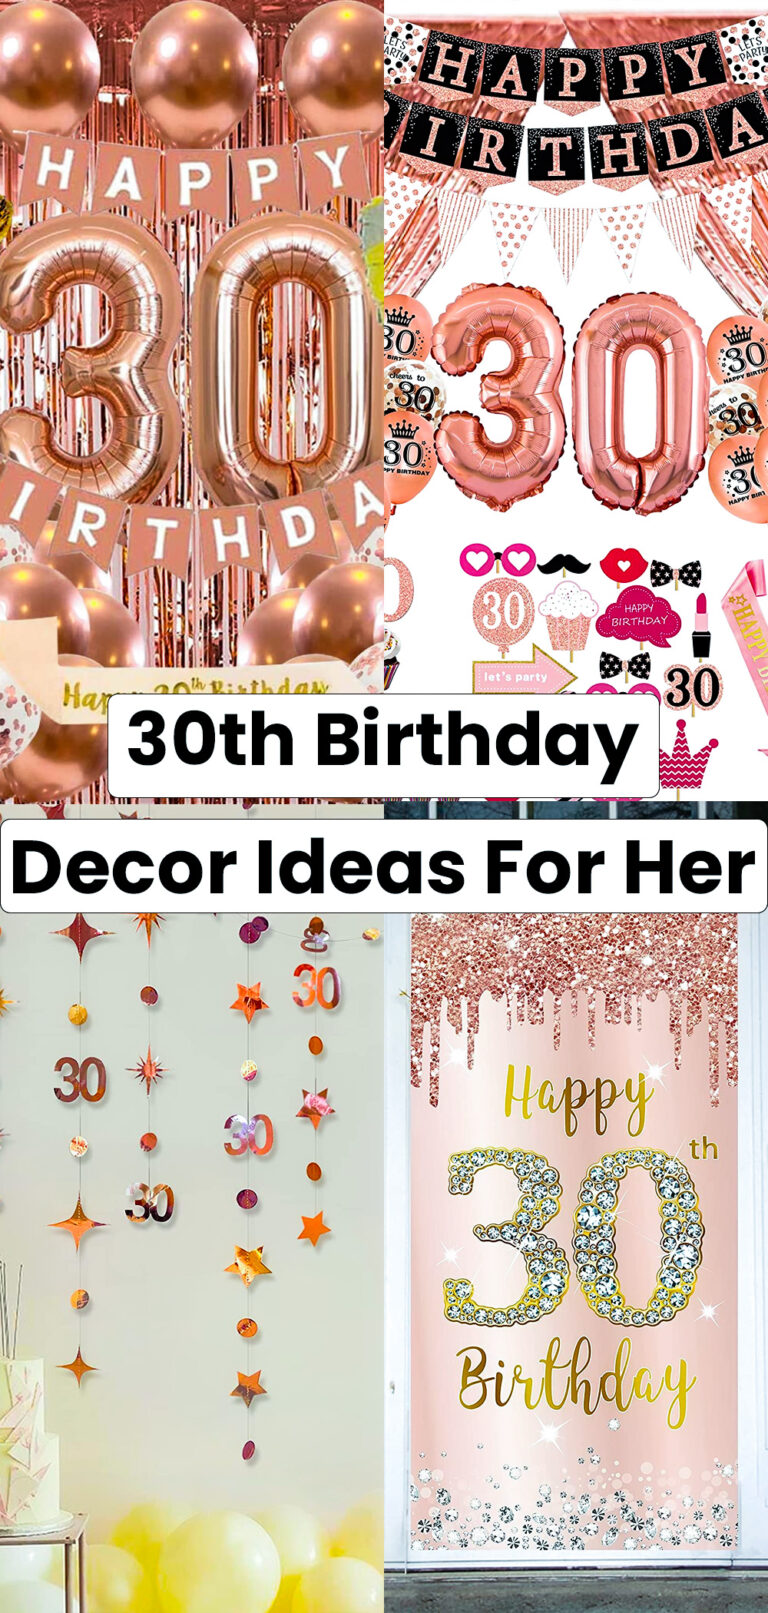 30th Birthday Decor Ideas for Her